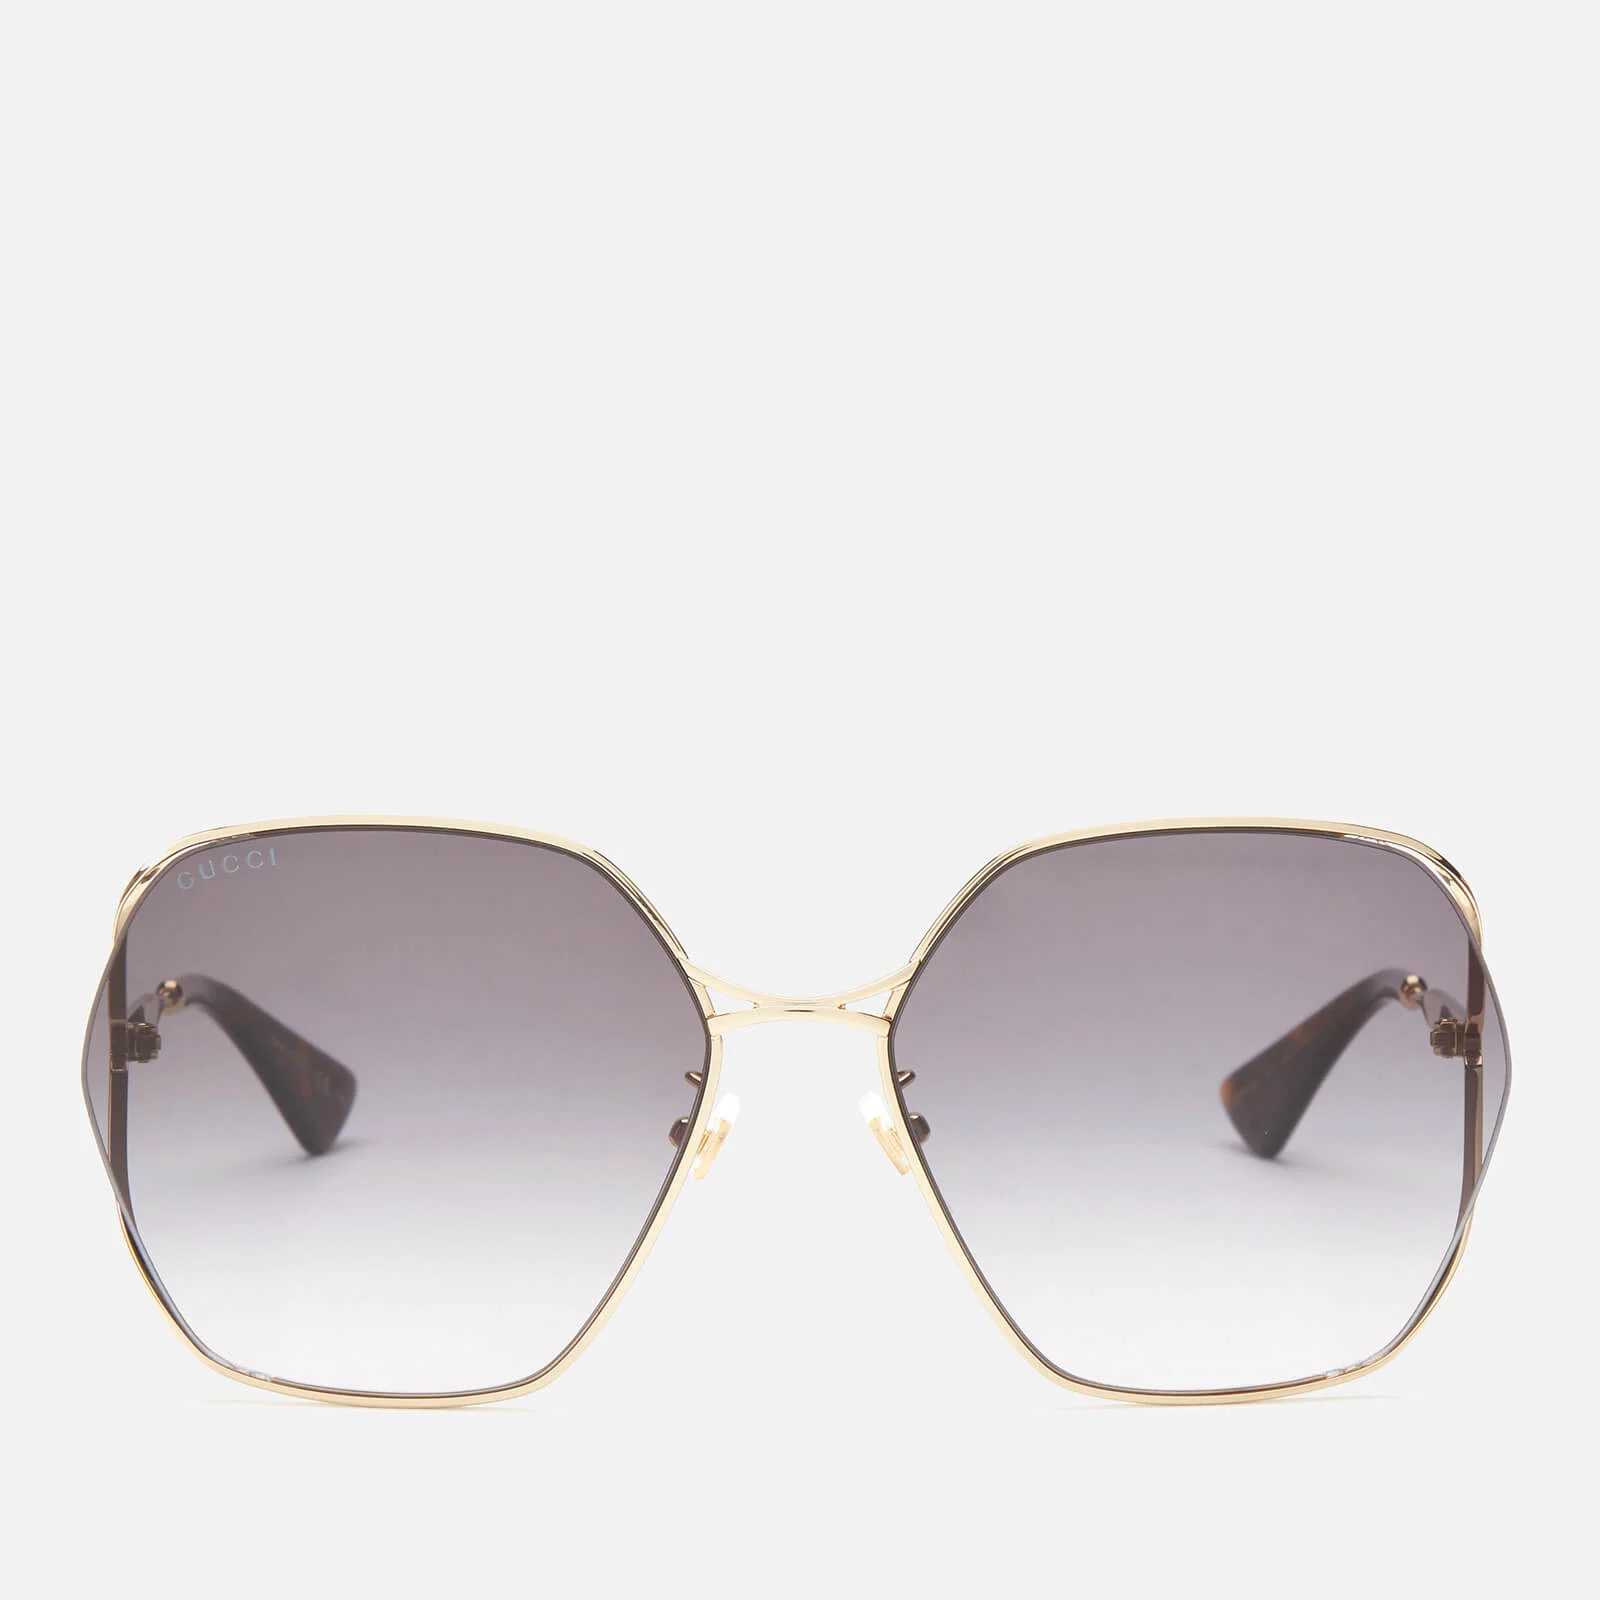 Gucci Women's Metal Frame Sunglasses - Gold/Grey Image 1